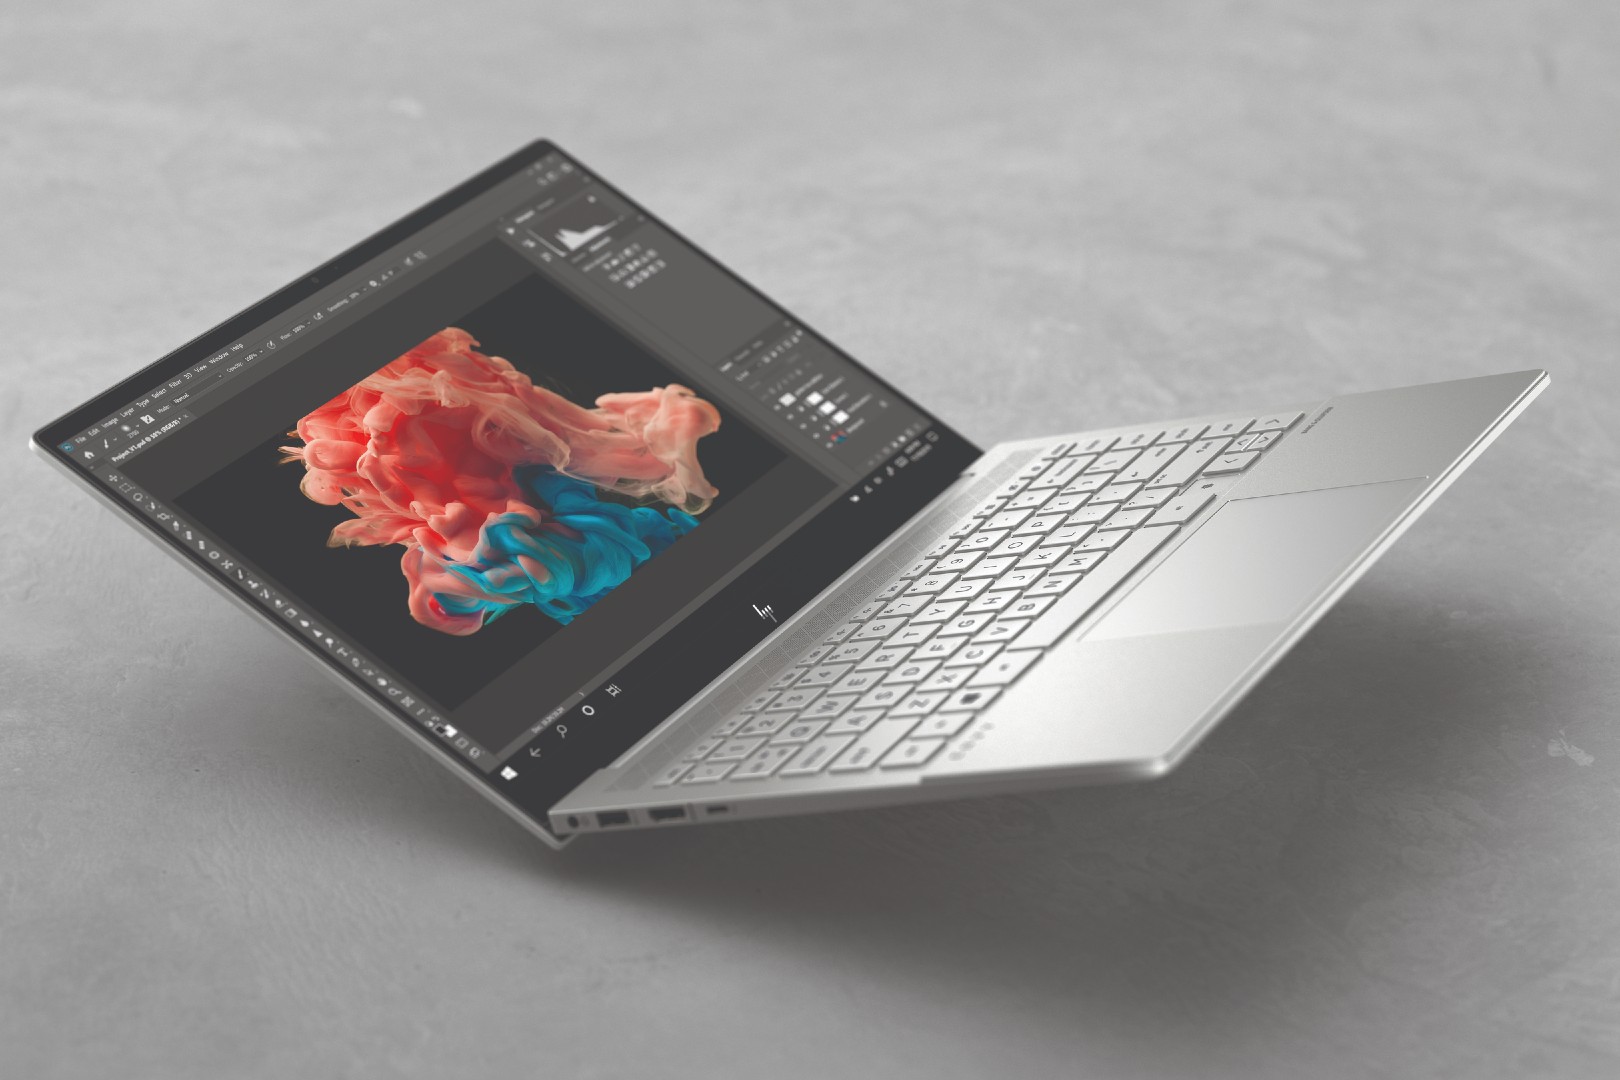 HP's new Envy x360 14 looks like killer value for the price